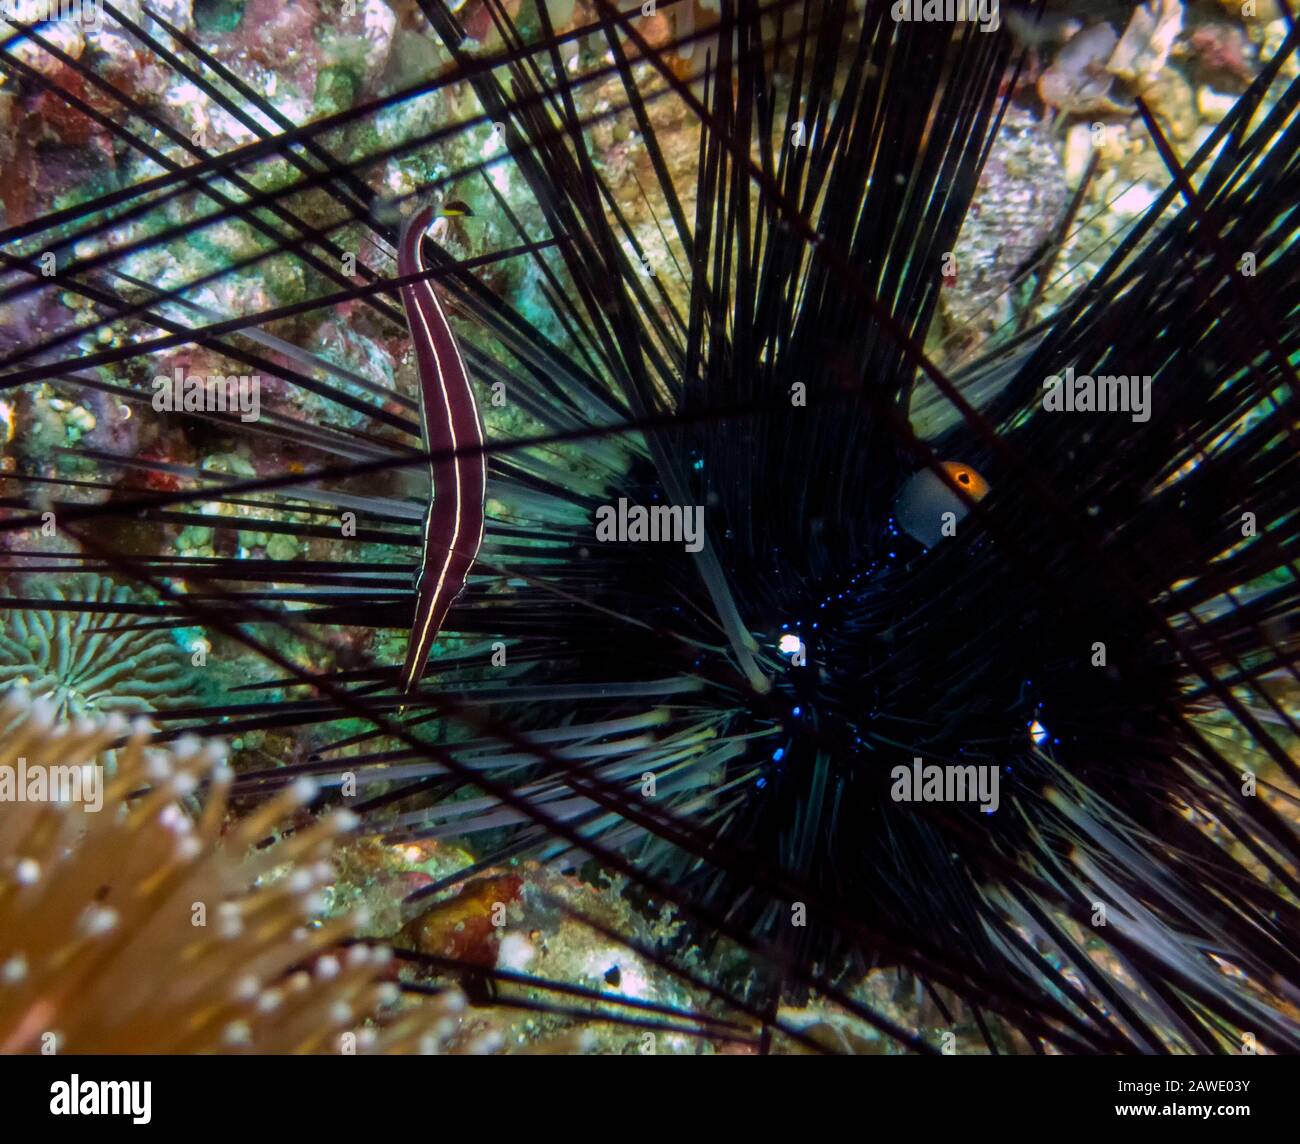 An Urchin Clingfish (Diademichthys lineatus) Stock Photo